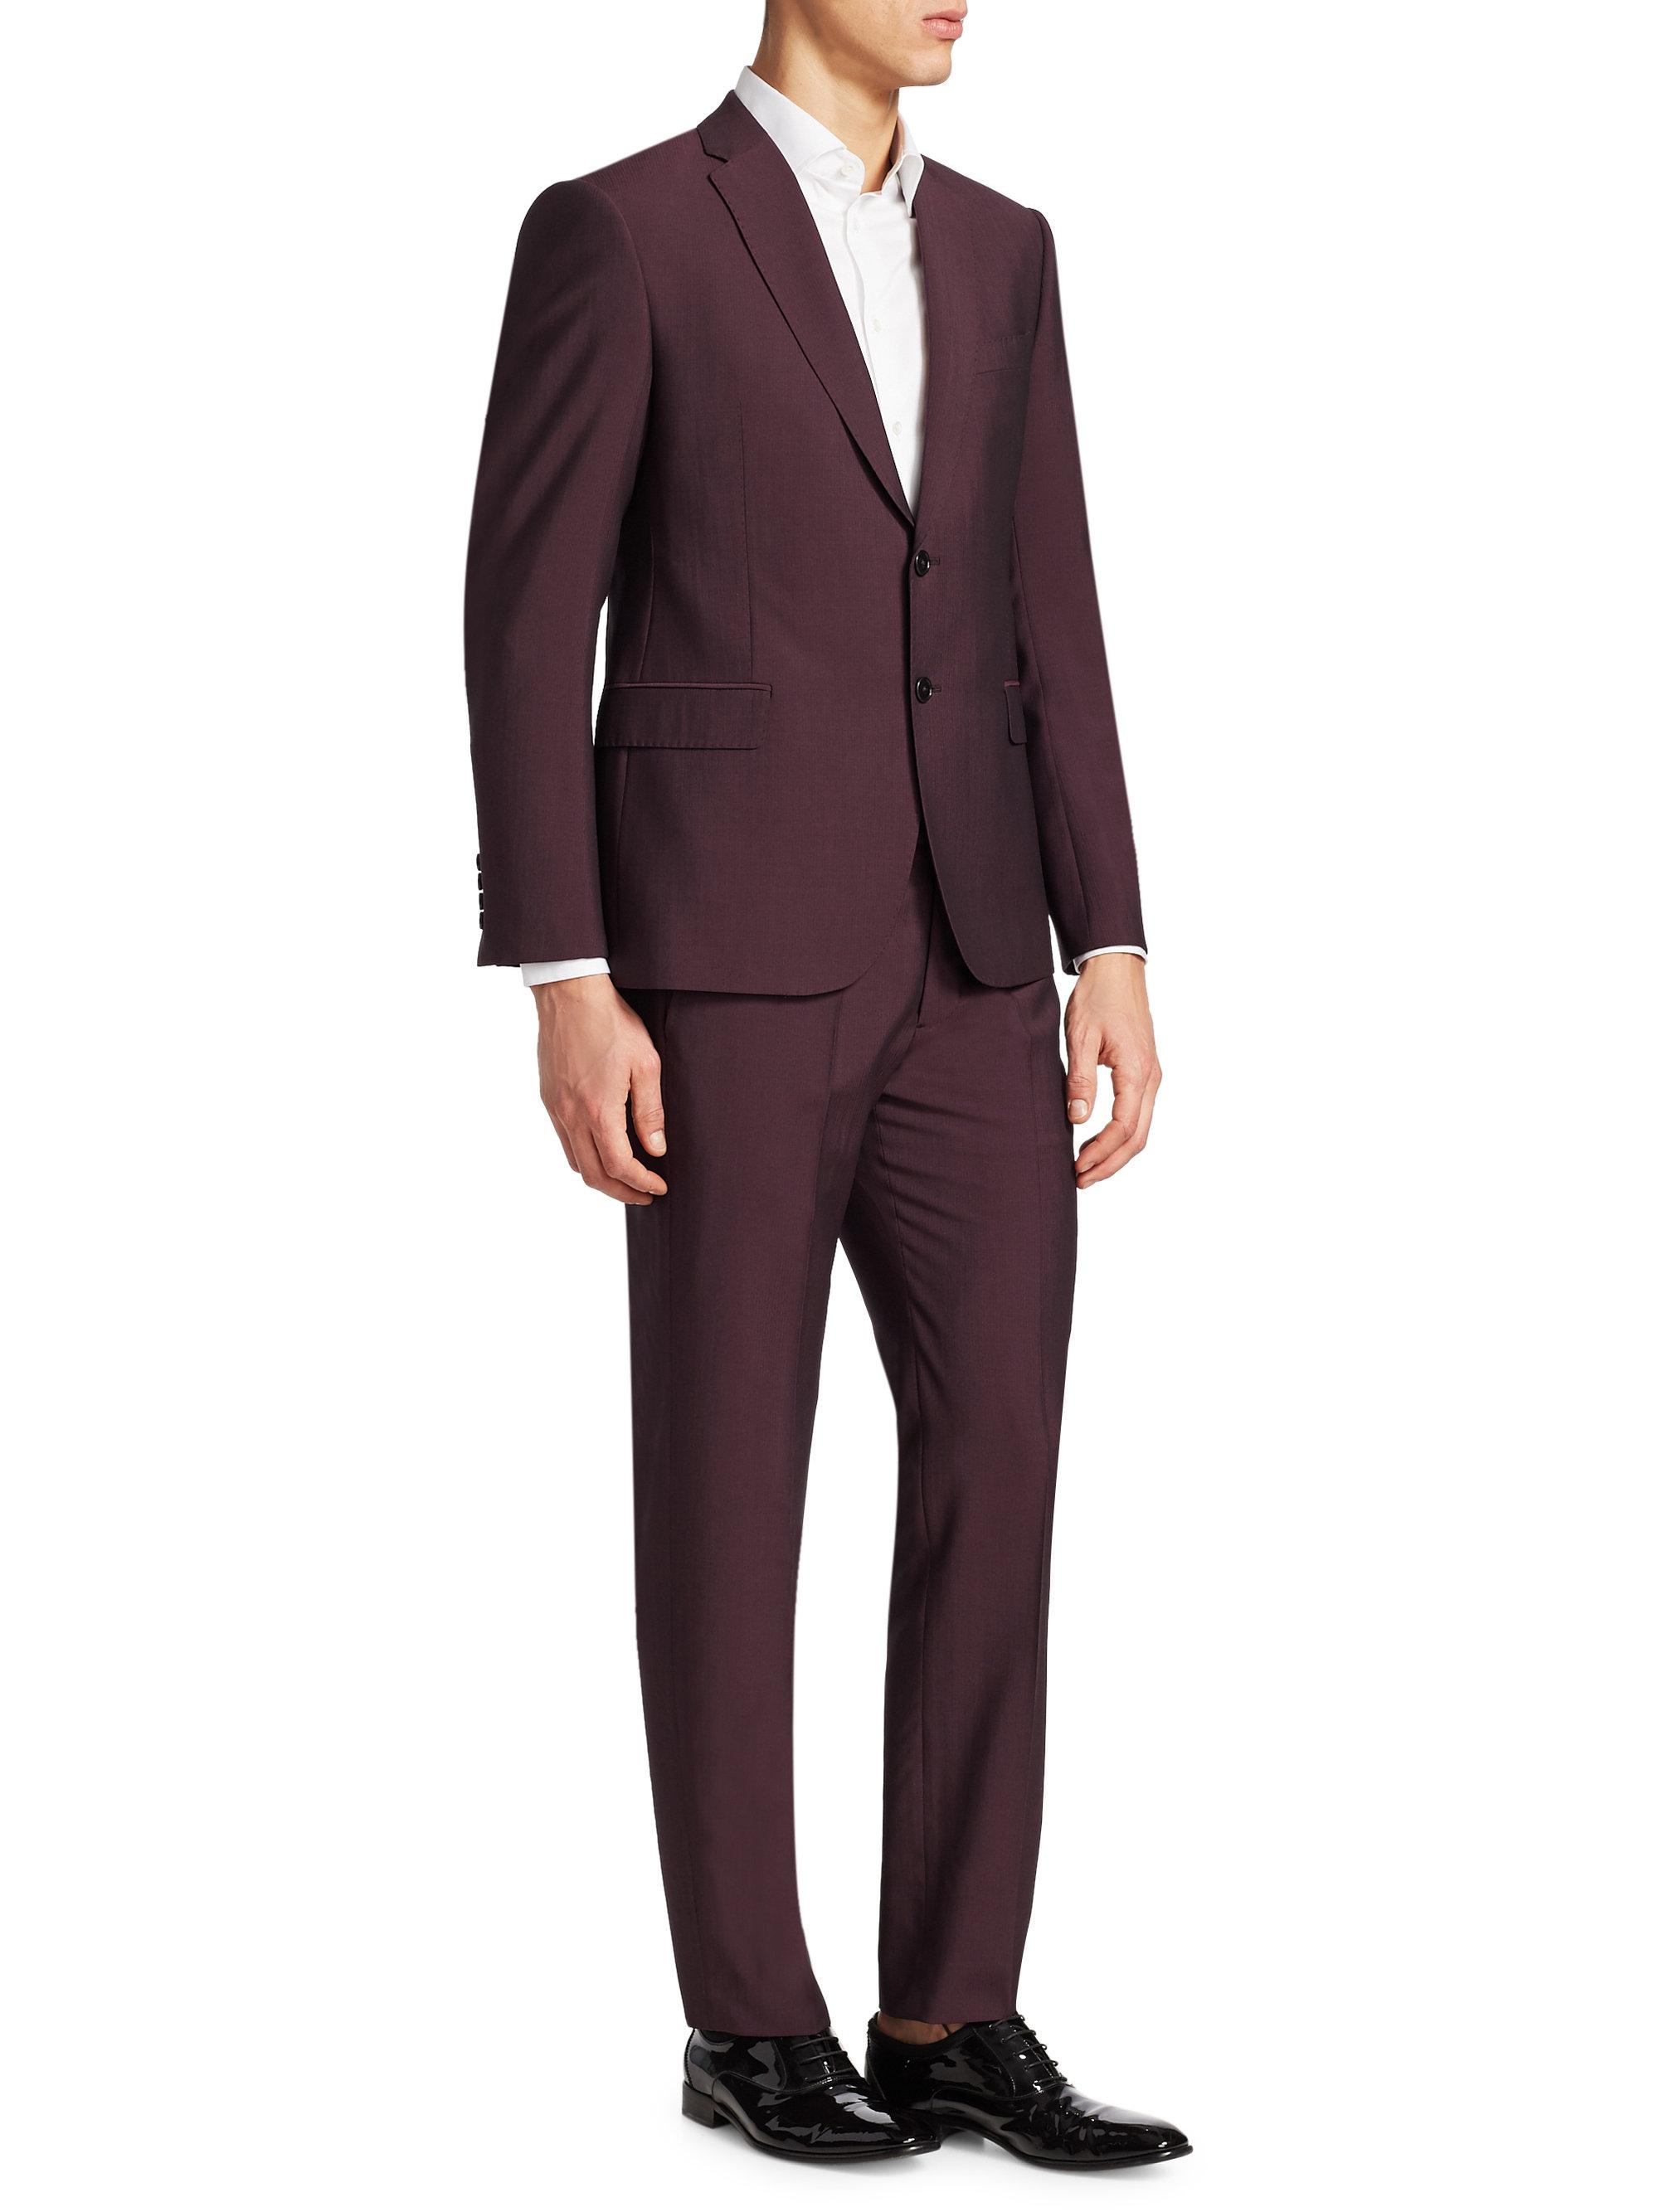 armani burgundy suit